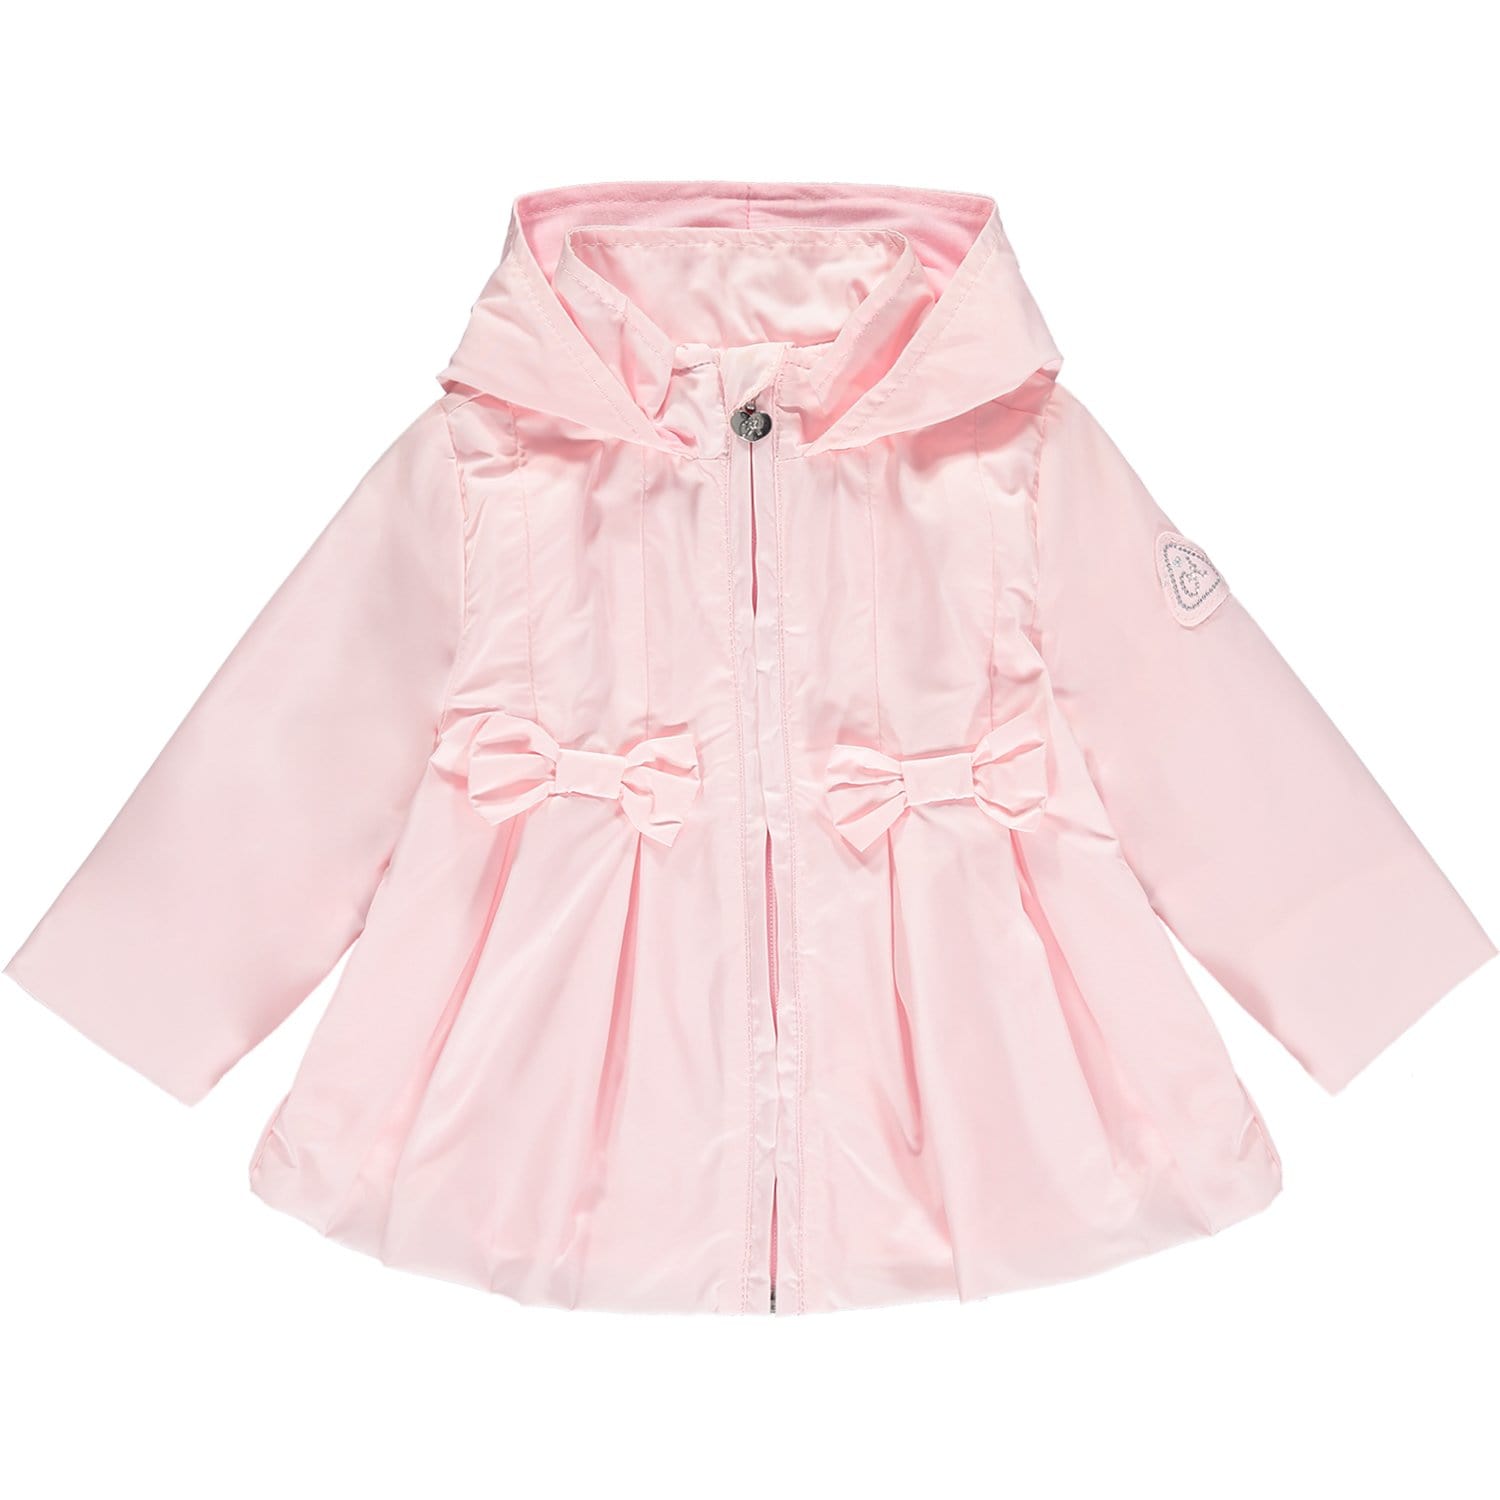 LITTLE A - Delilah Bow Jacket - Pink